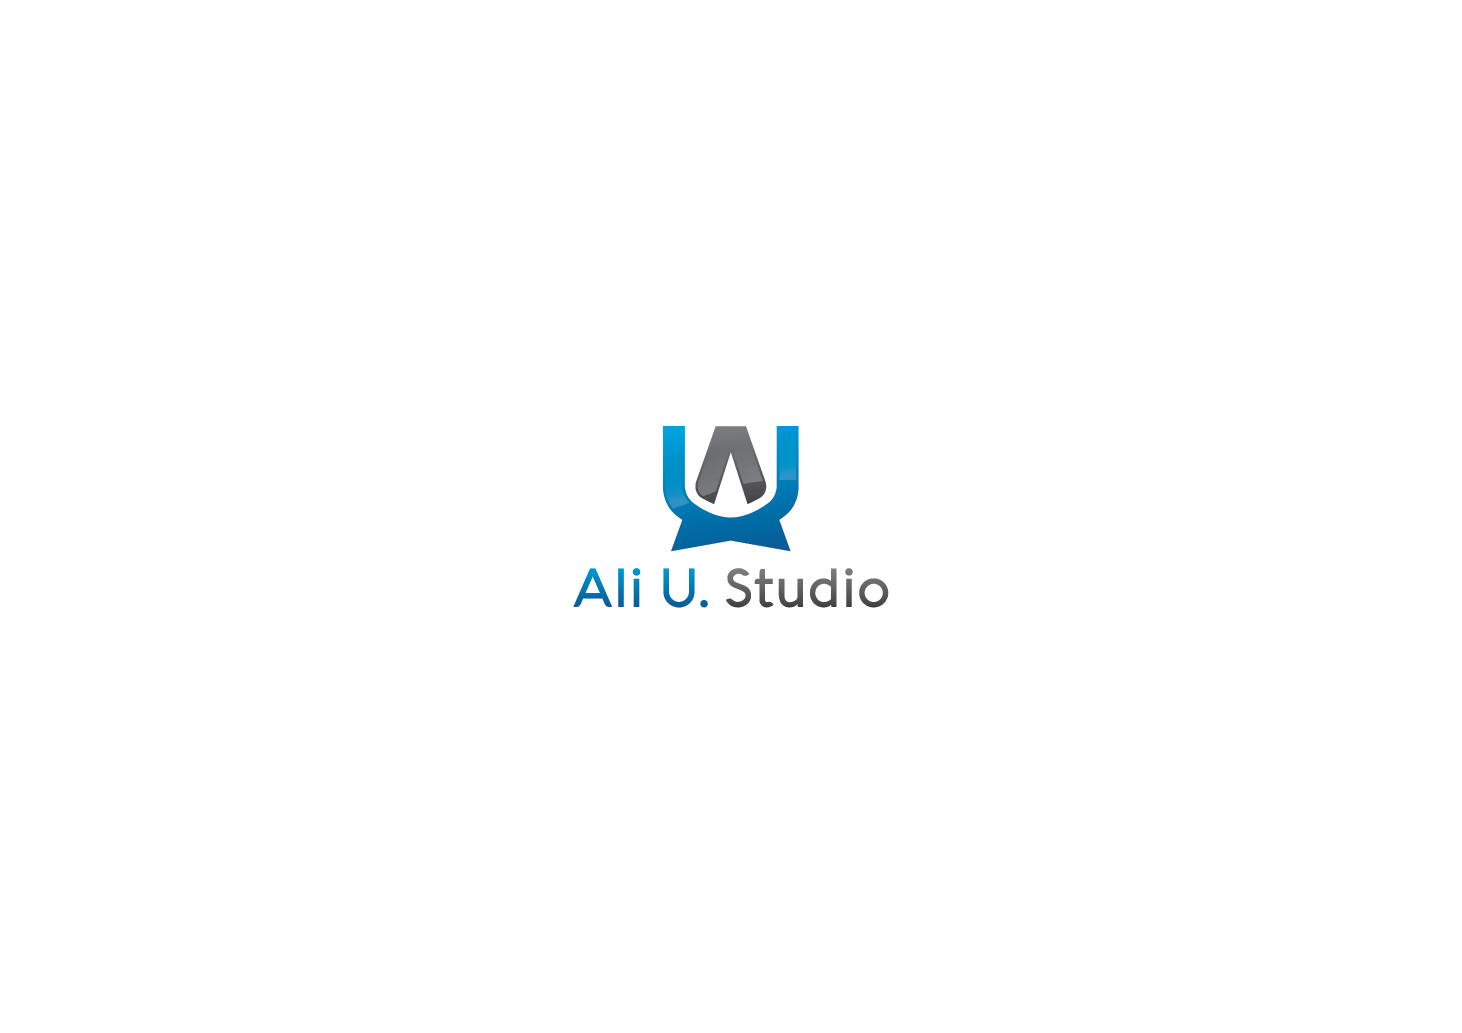 Crazy U Logo - Elegant, Playful, Paint Logo Design for Ali U. Art Studio or Ali U ...